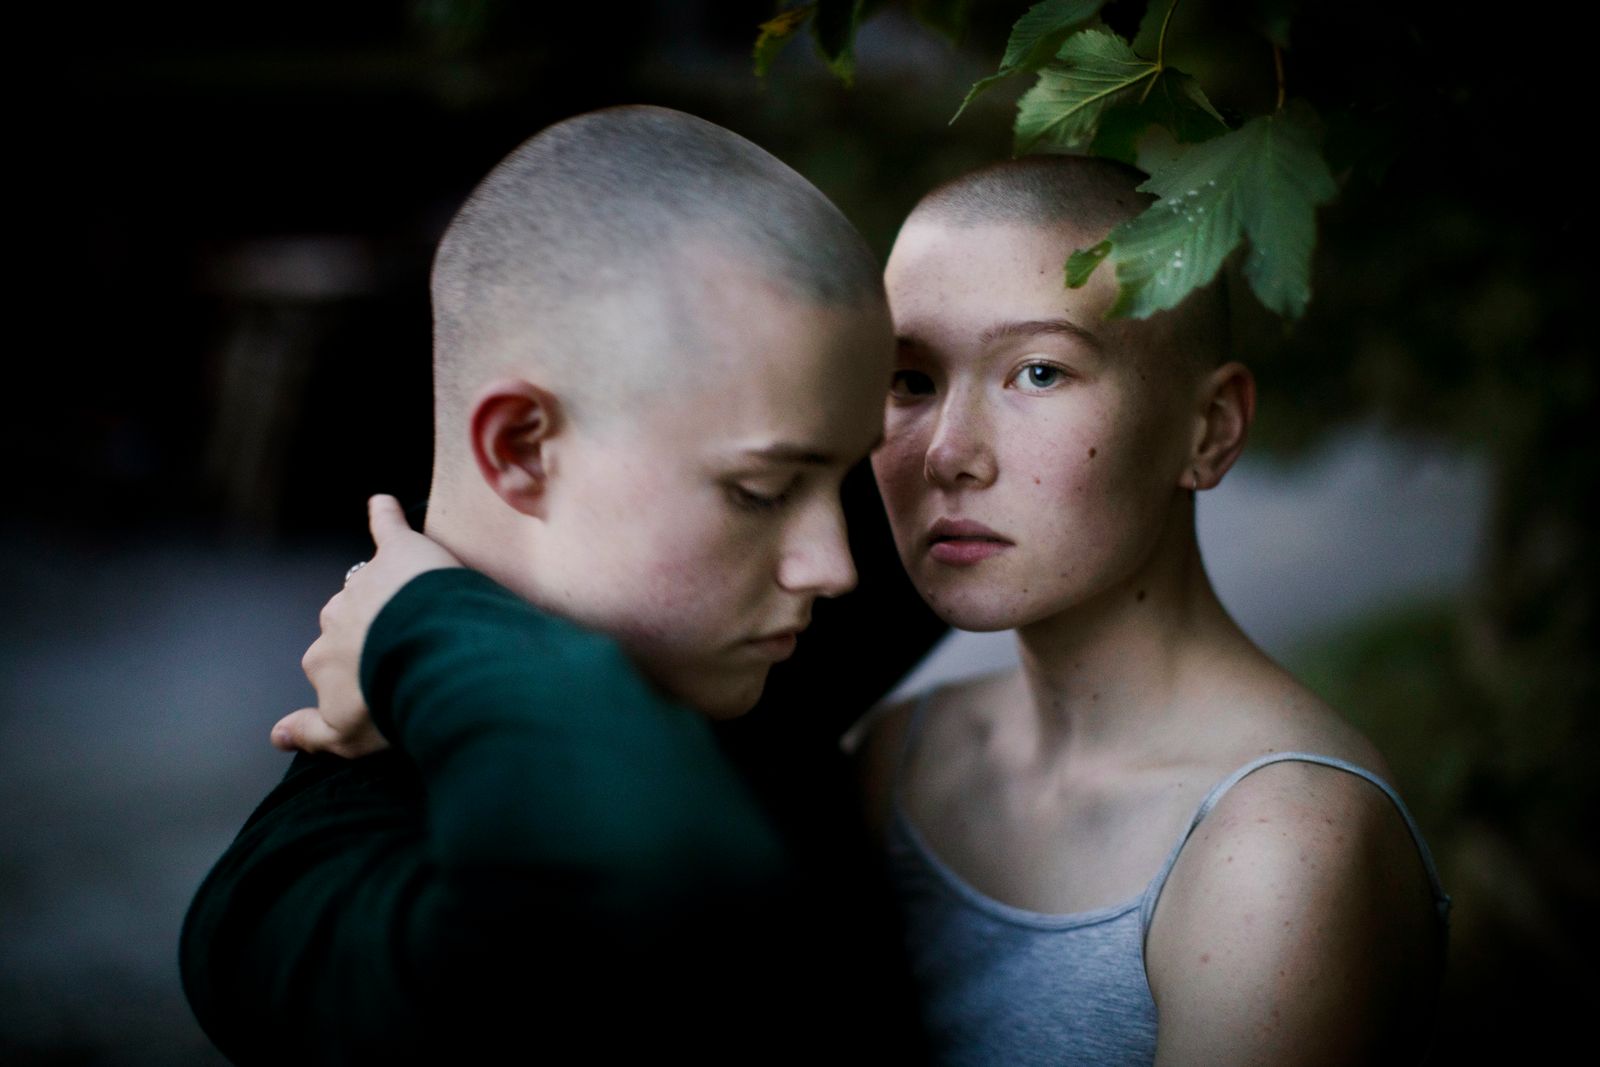 © Åsa Sjöström - Image from the Genderfree photography project